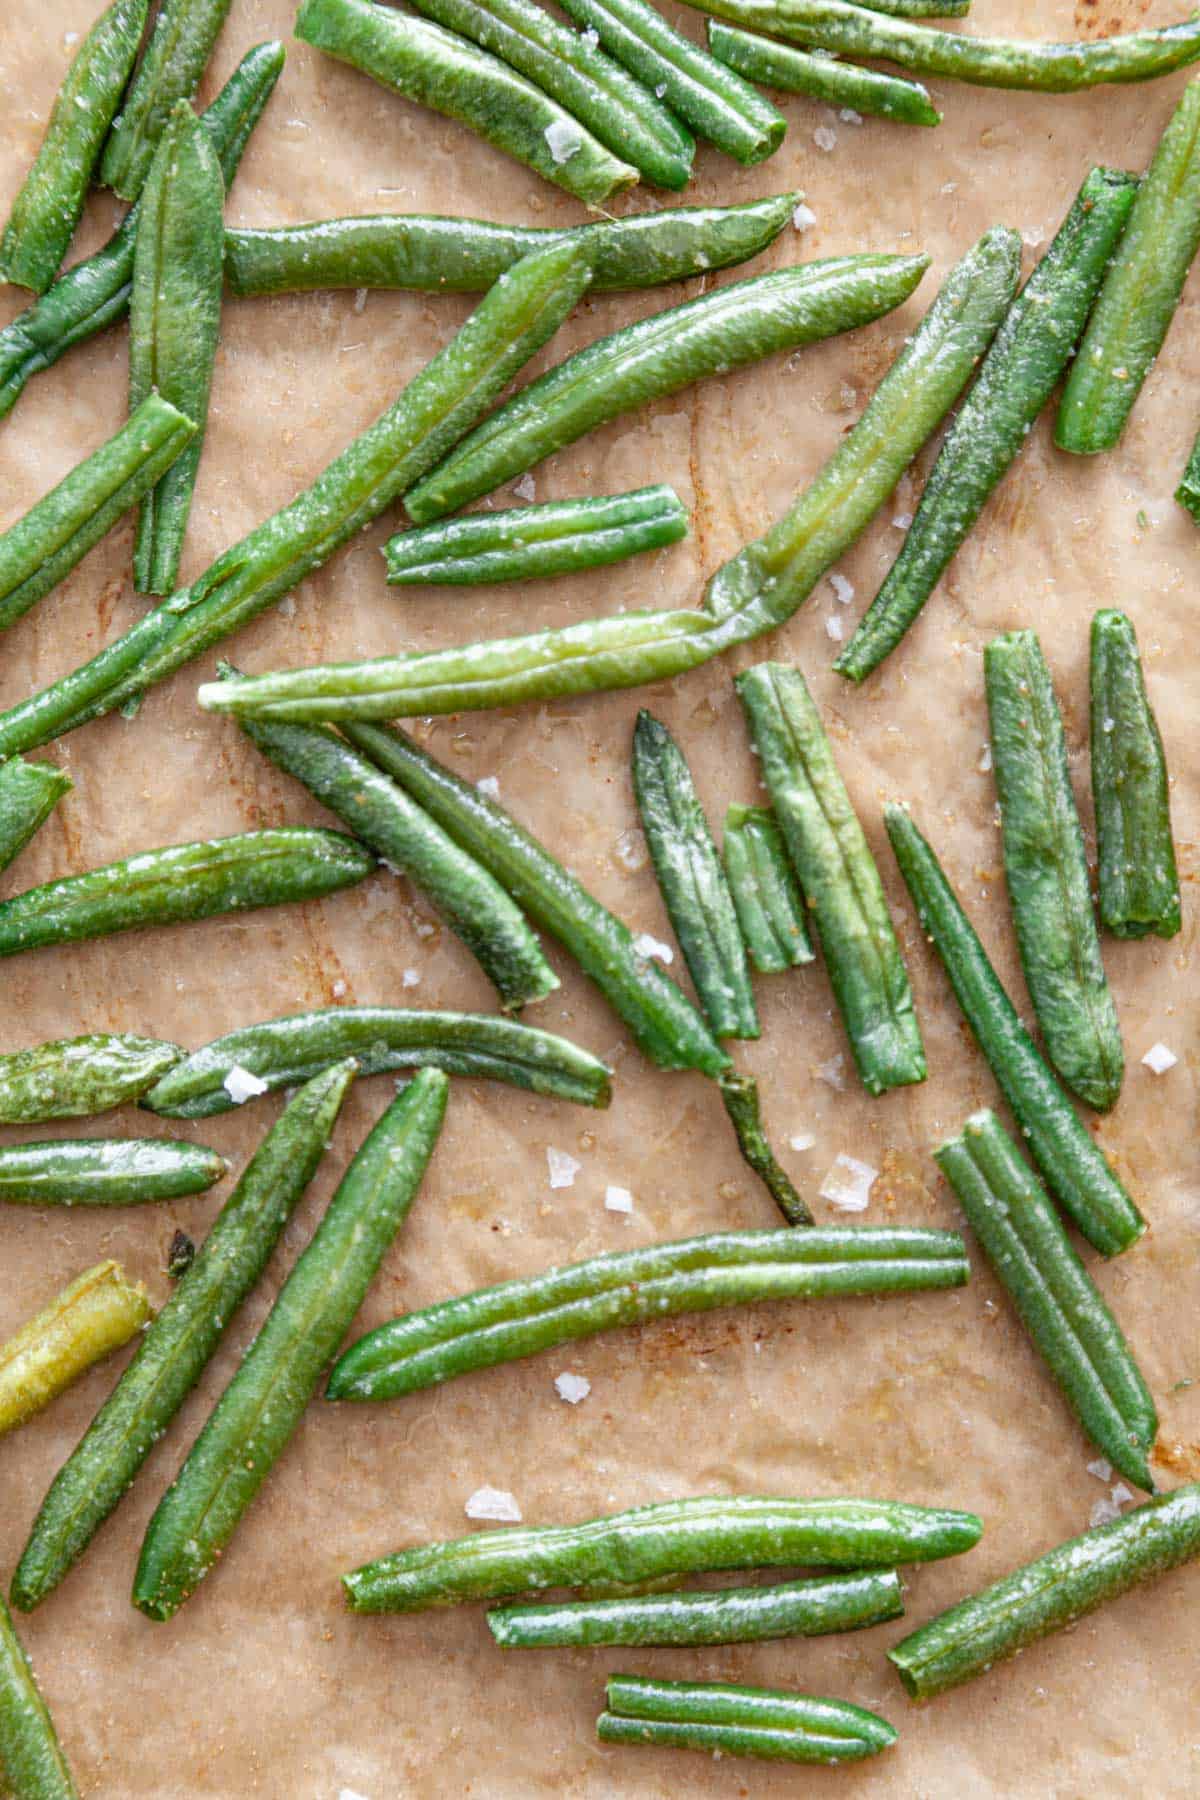 A sheet-pan of green beans with sea salt.